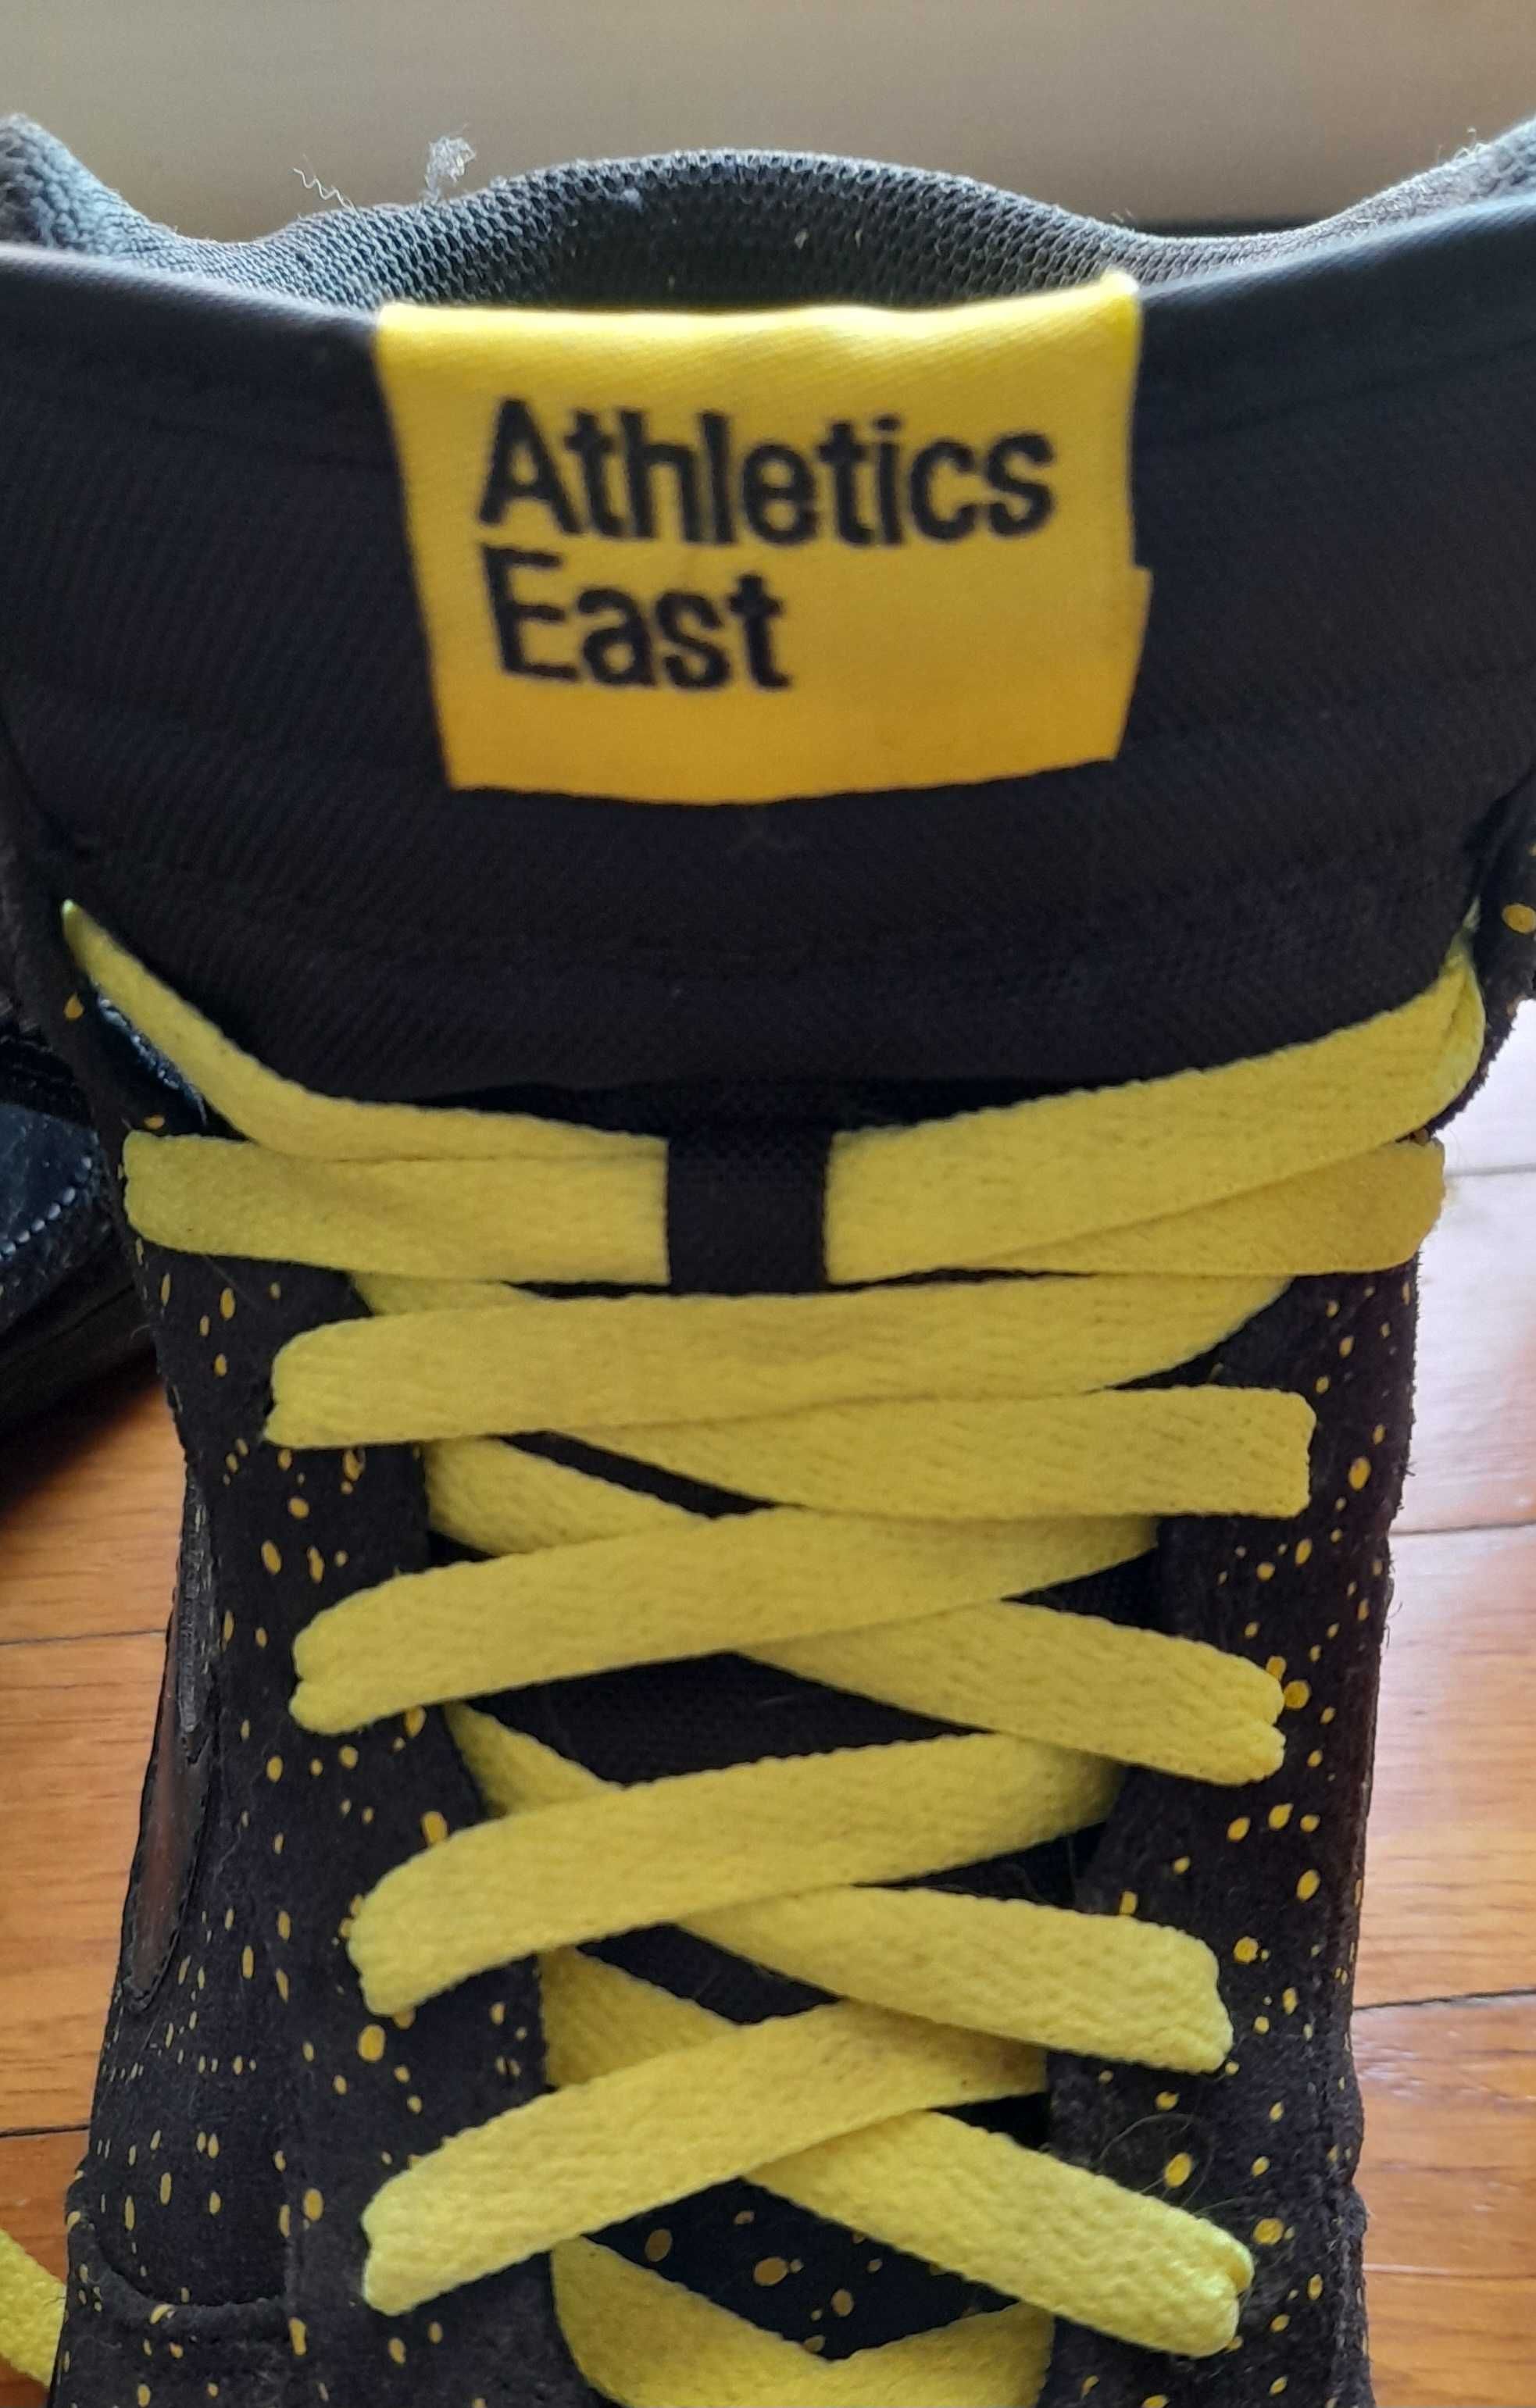 Sapatilhas Nike Athletics East Novas